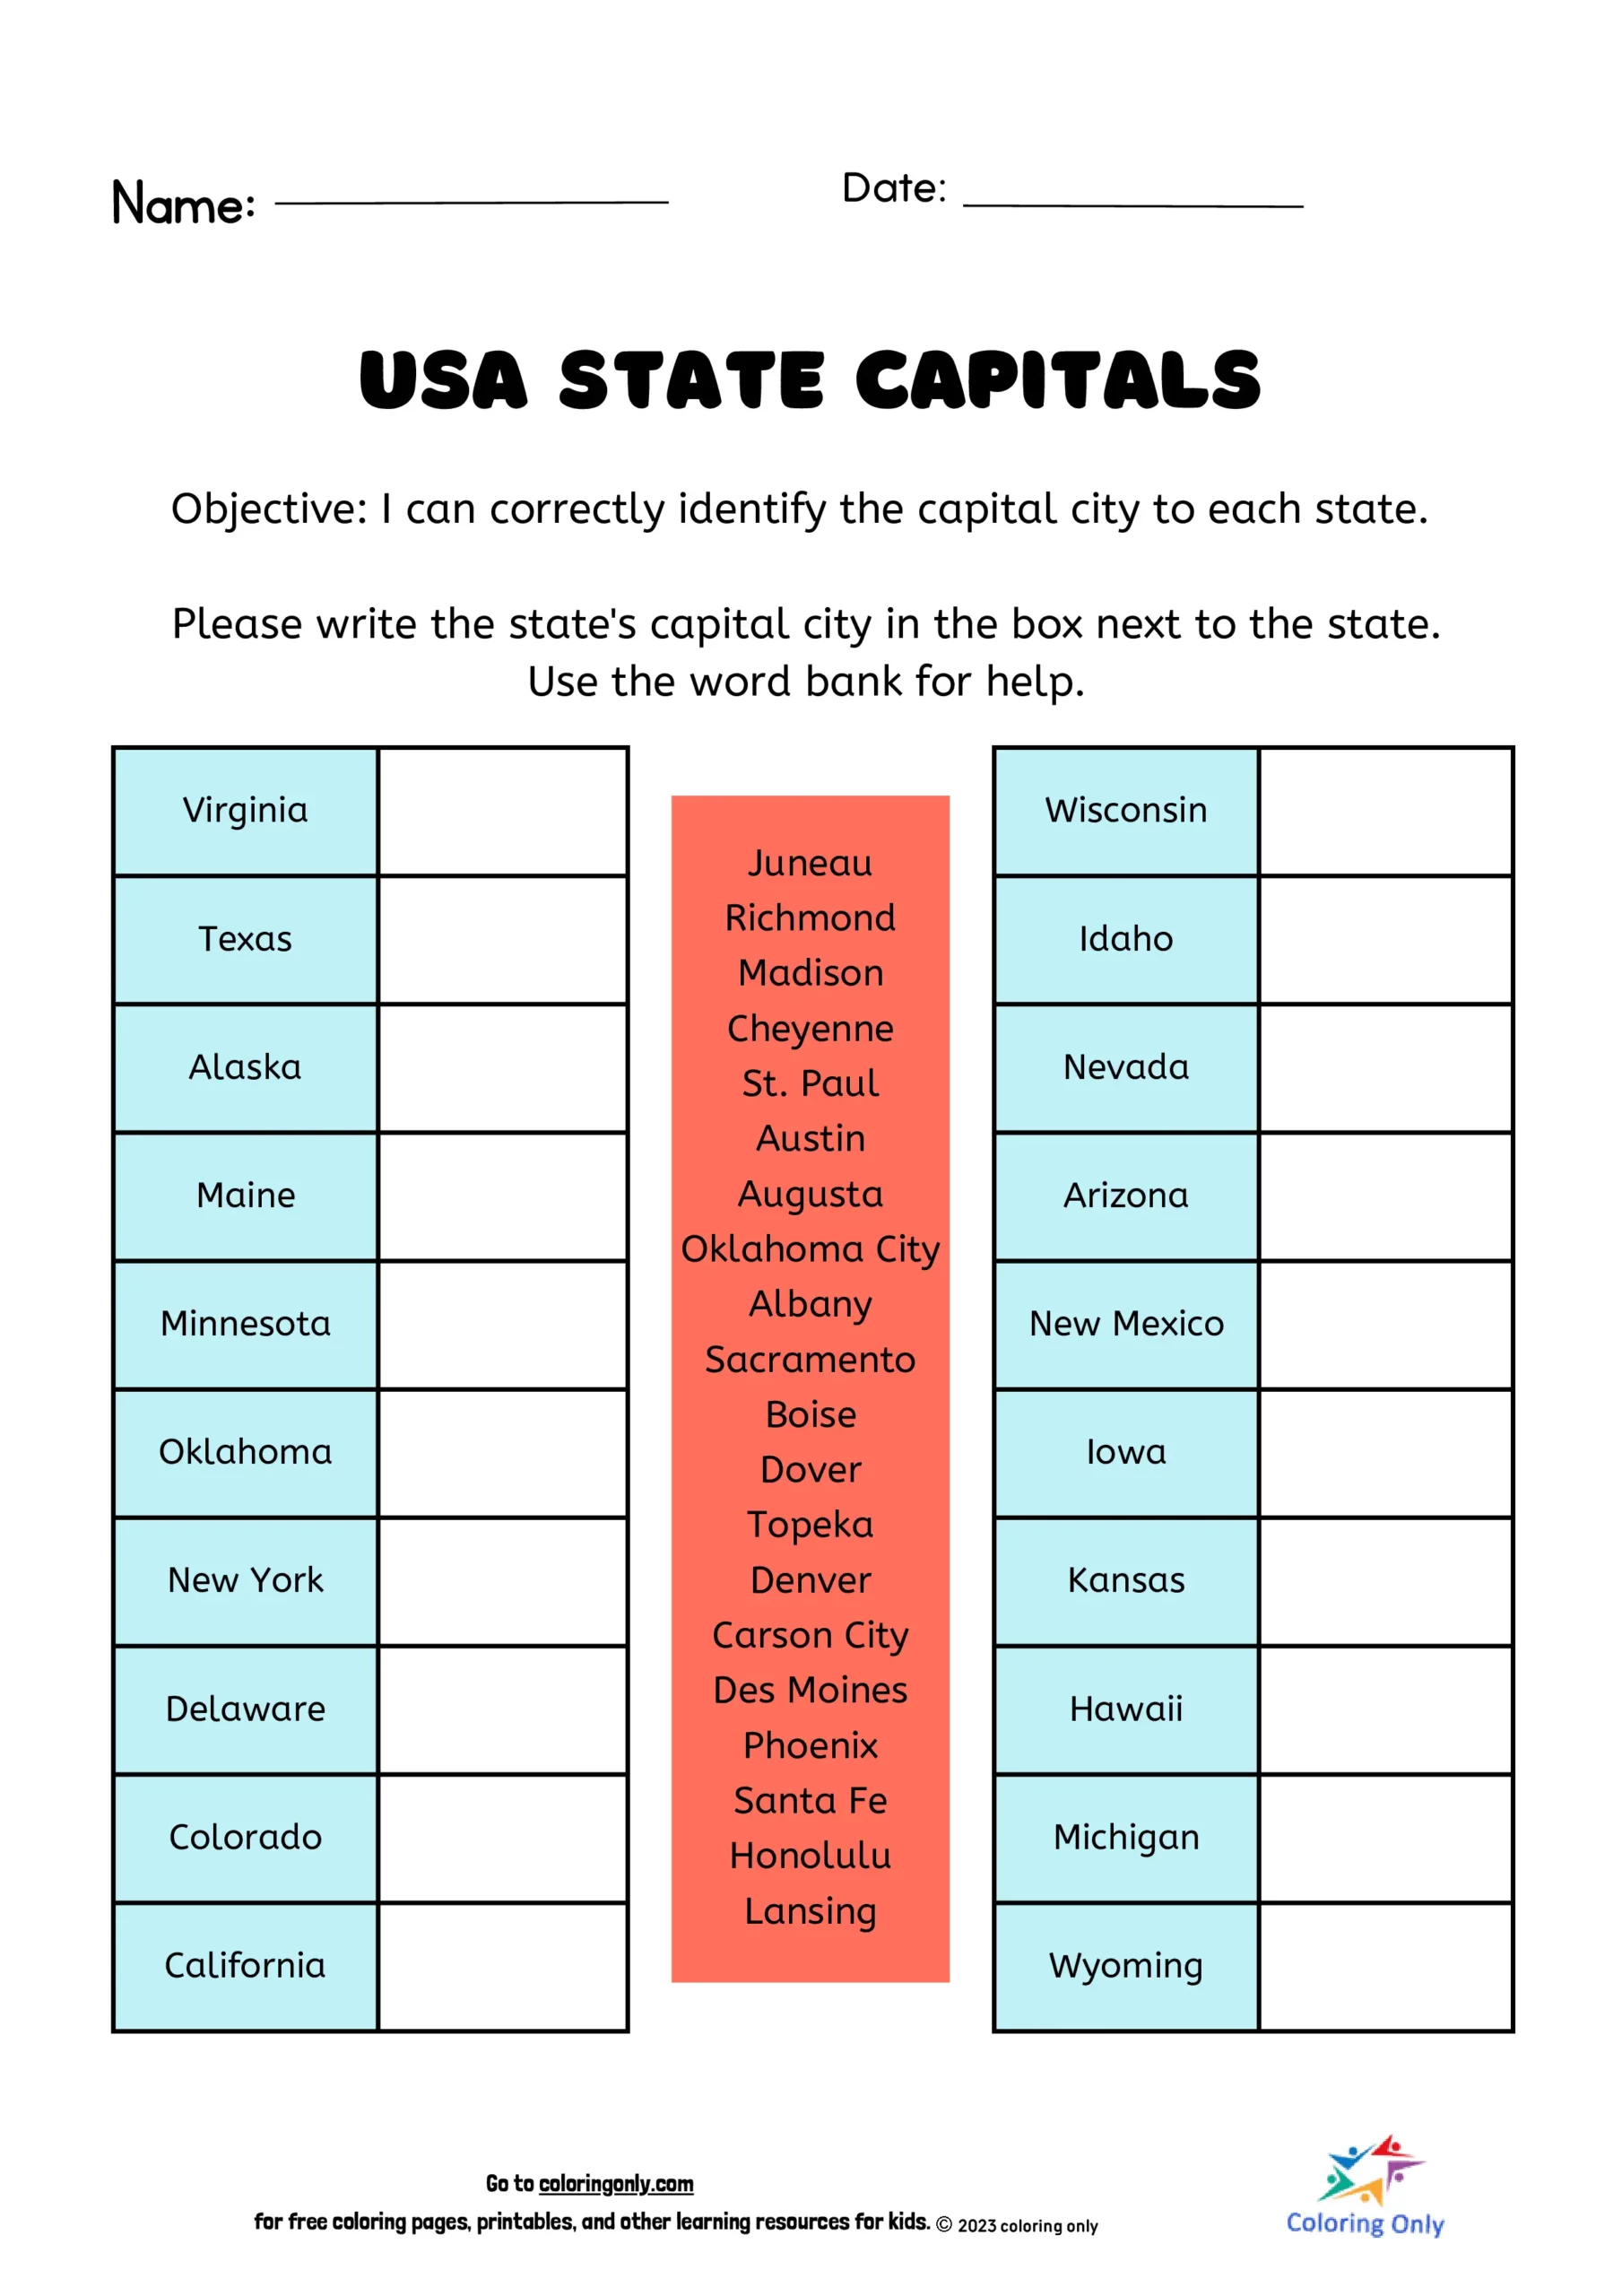 USA State Capitals